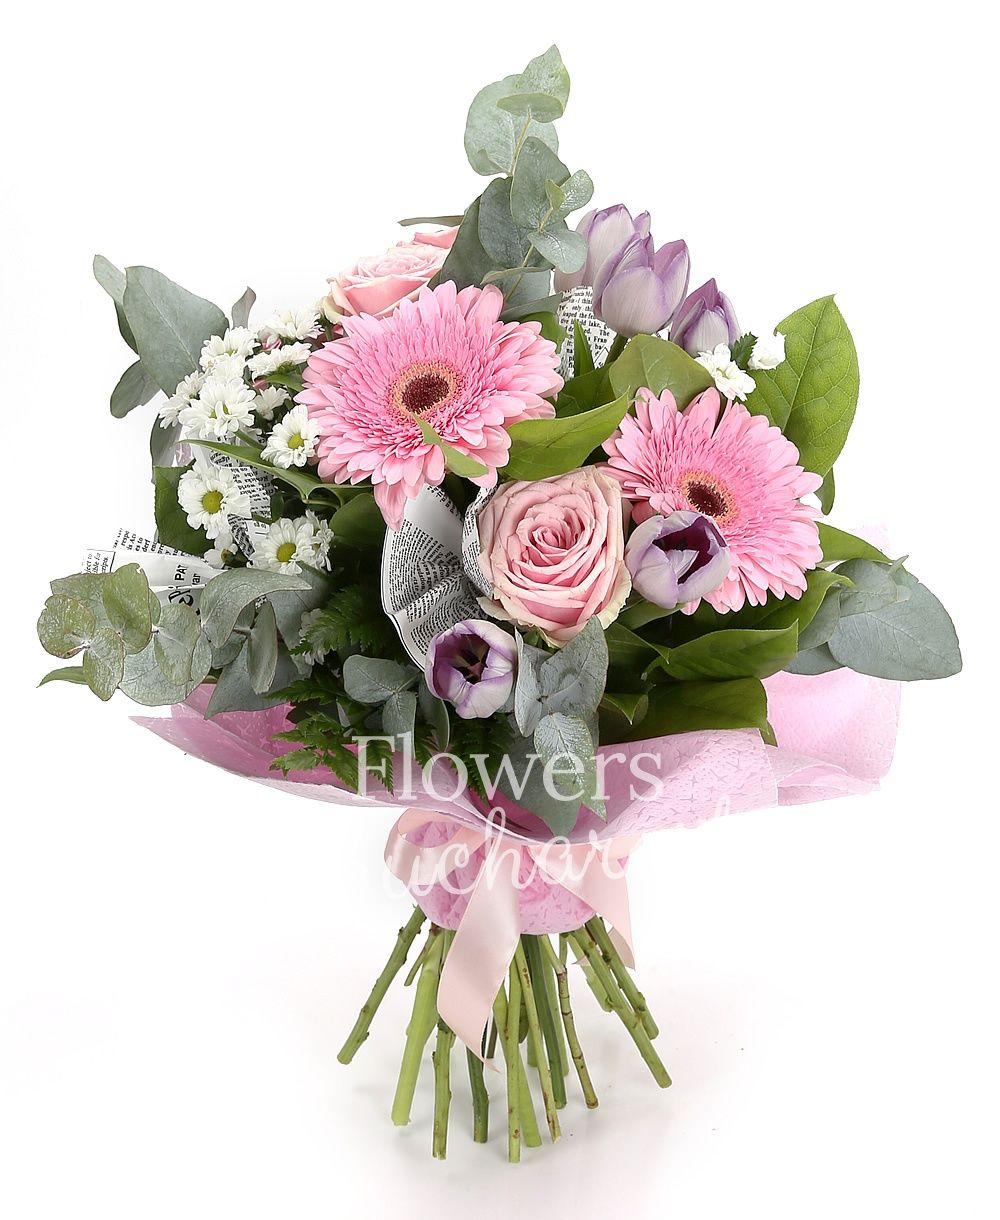 3 pink roses, 3 pink gerberas, 3 white chrysanthemums, 5 purple tulips, greenery